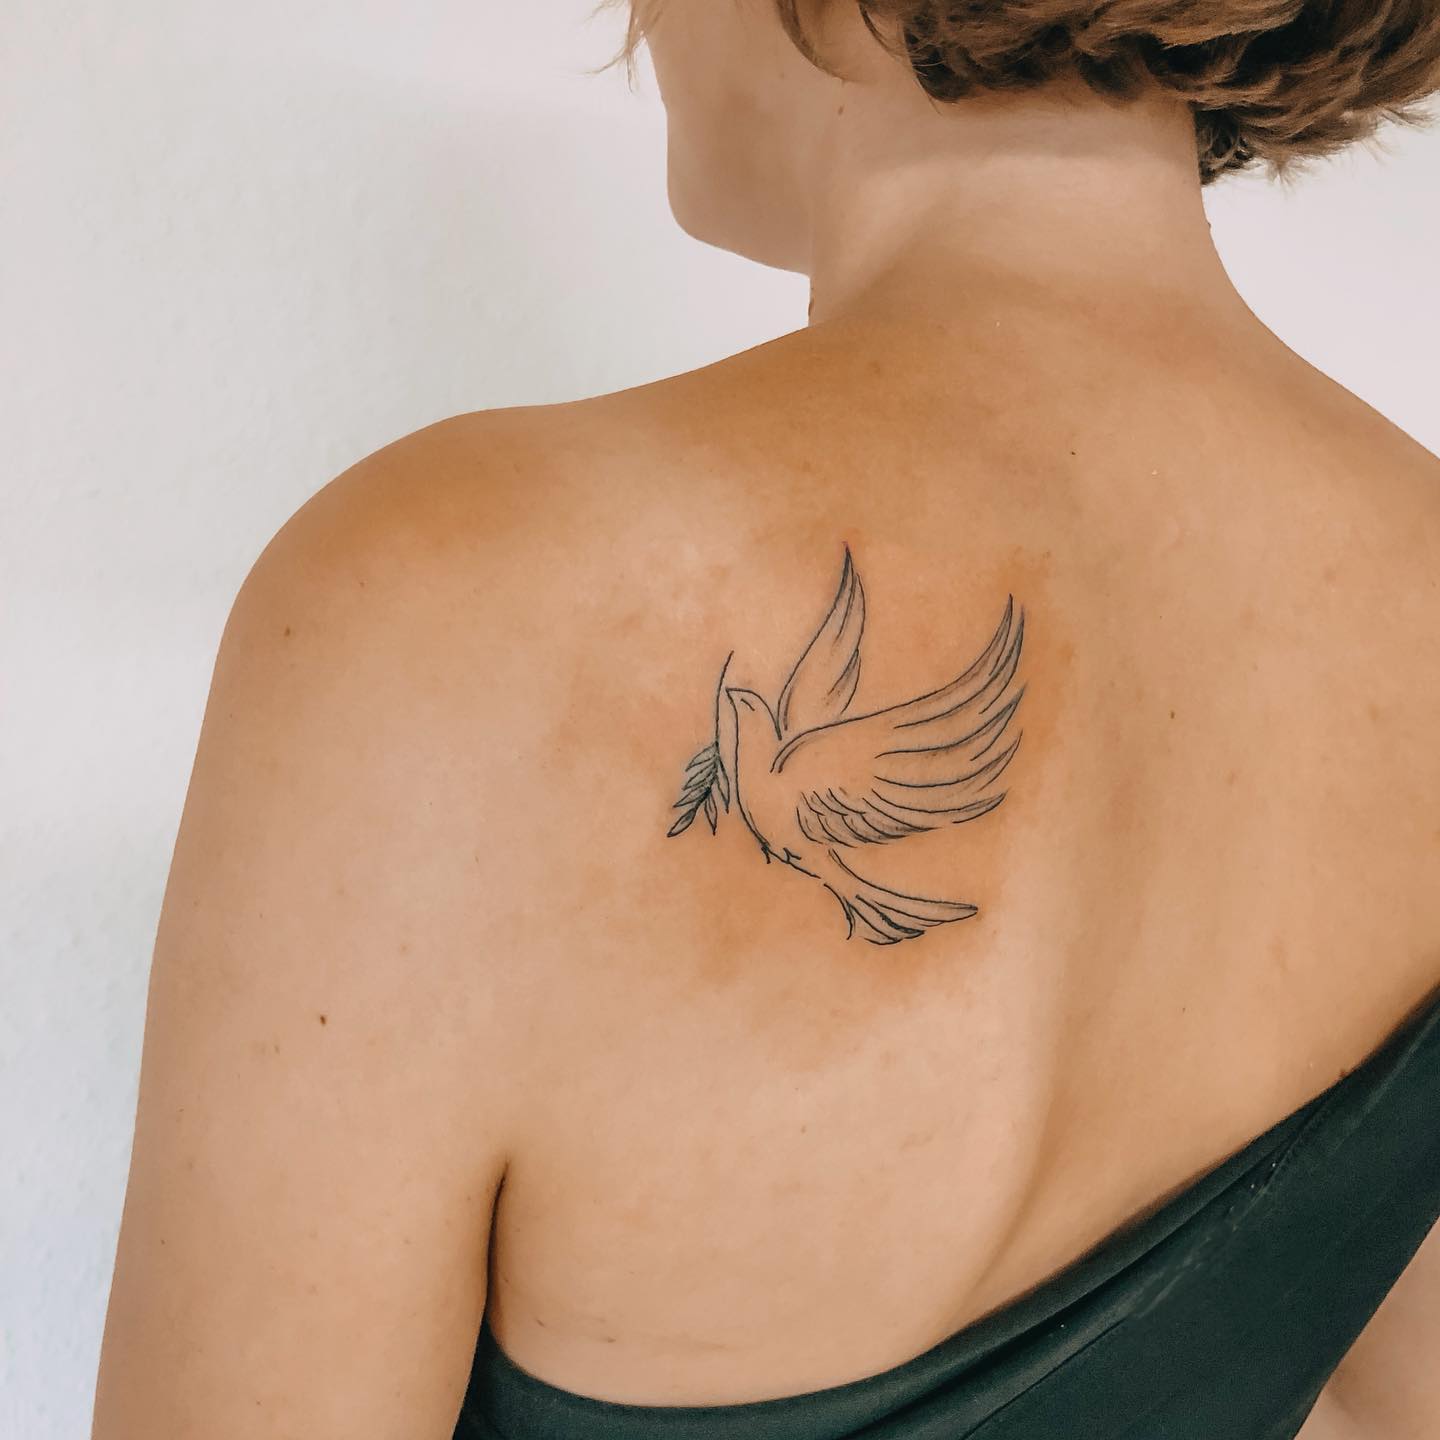 Tatuaje de paloma pequeña en la espalda